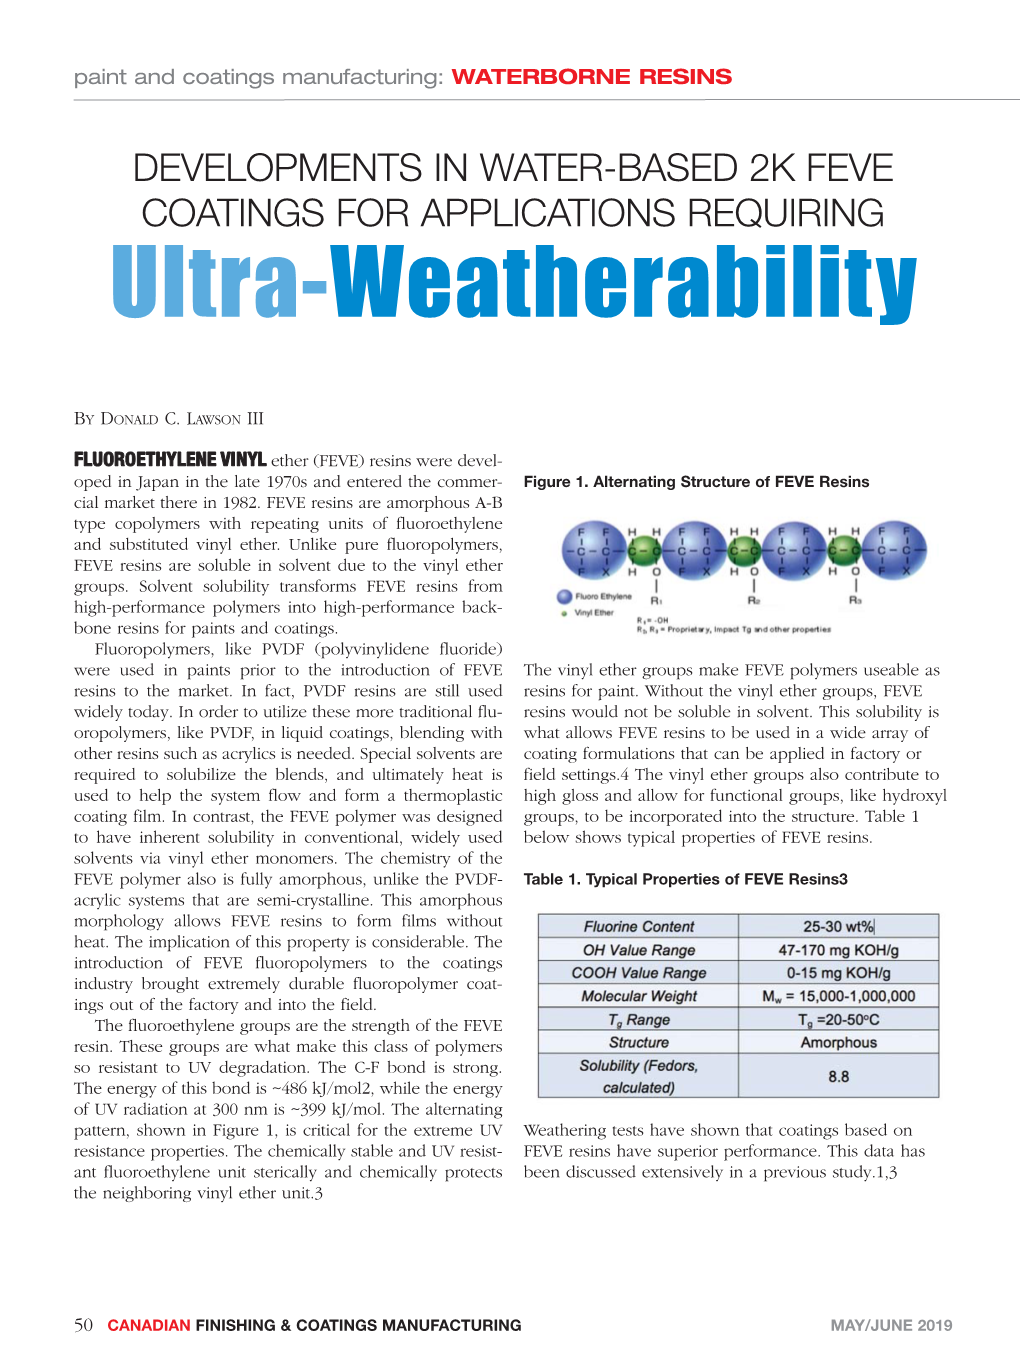 Ultra-Weatherability